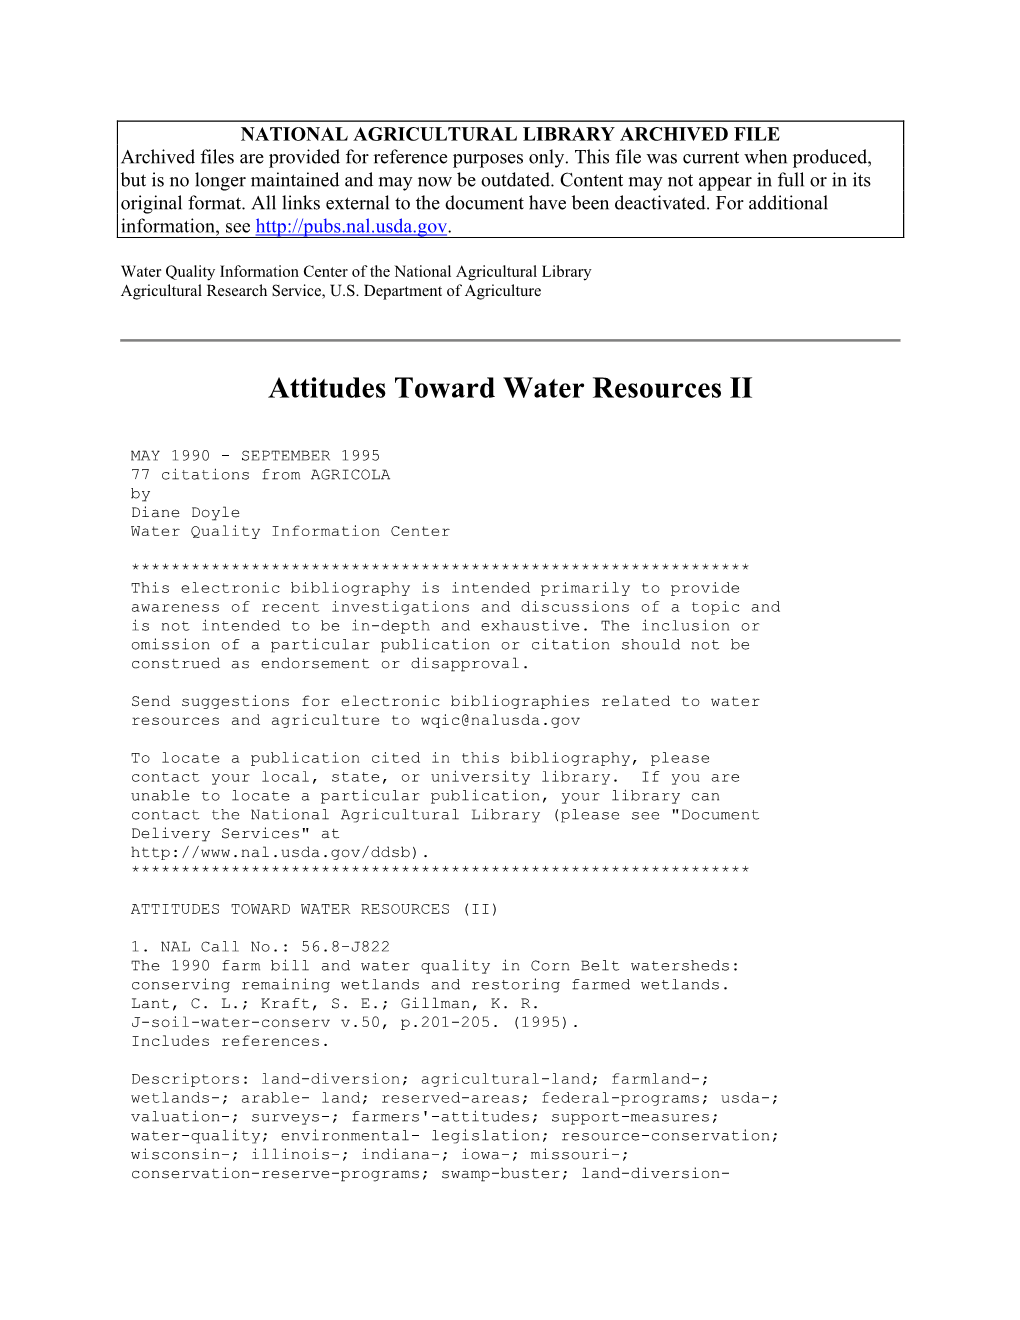 Attitudes Toward Water Resources II